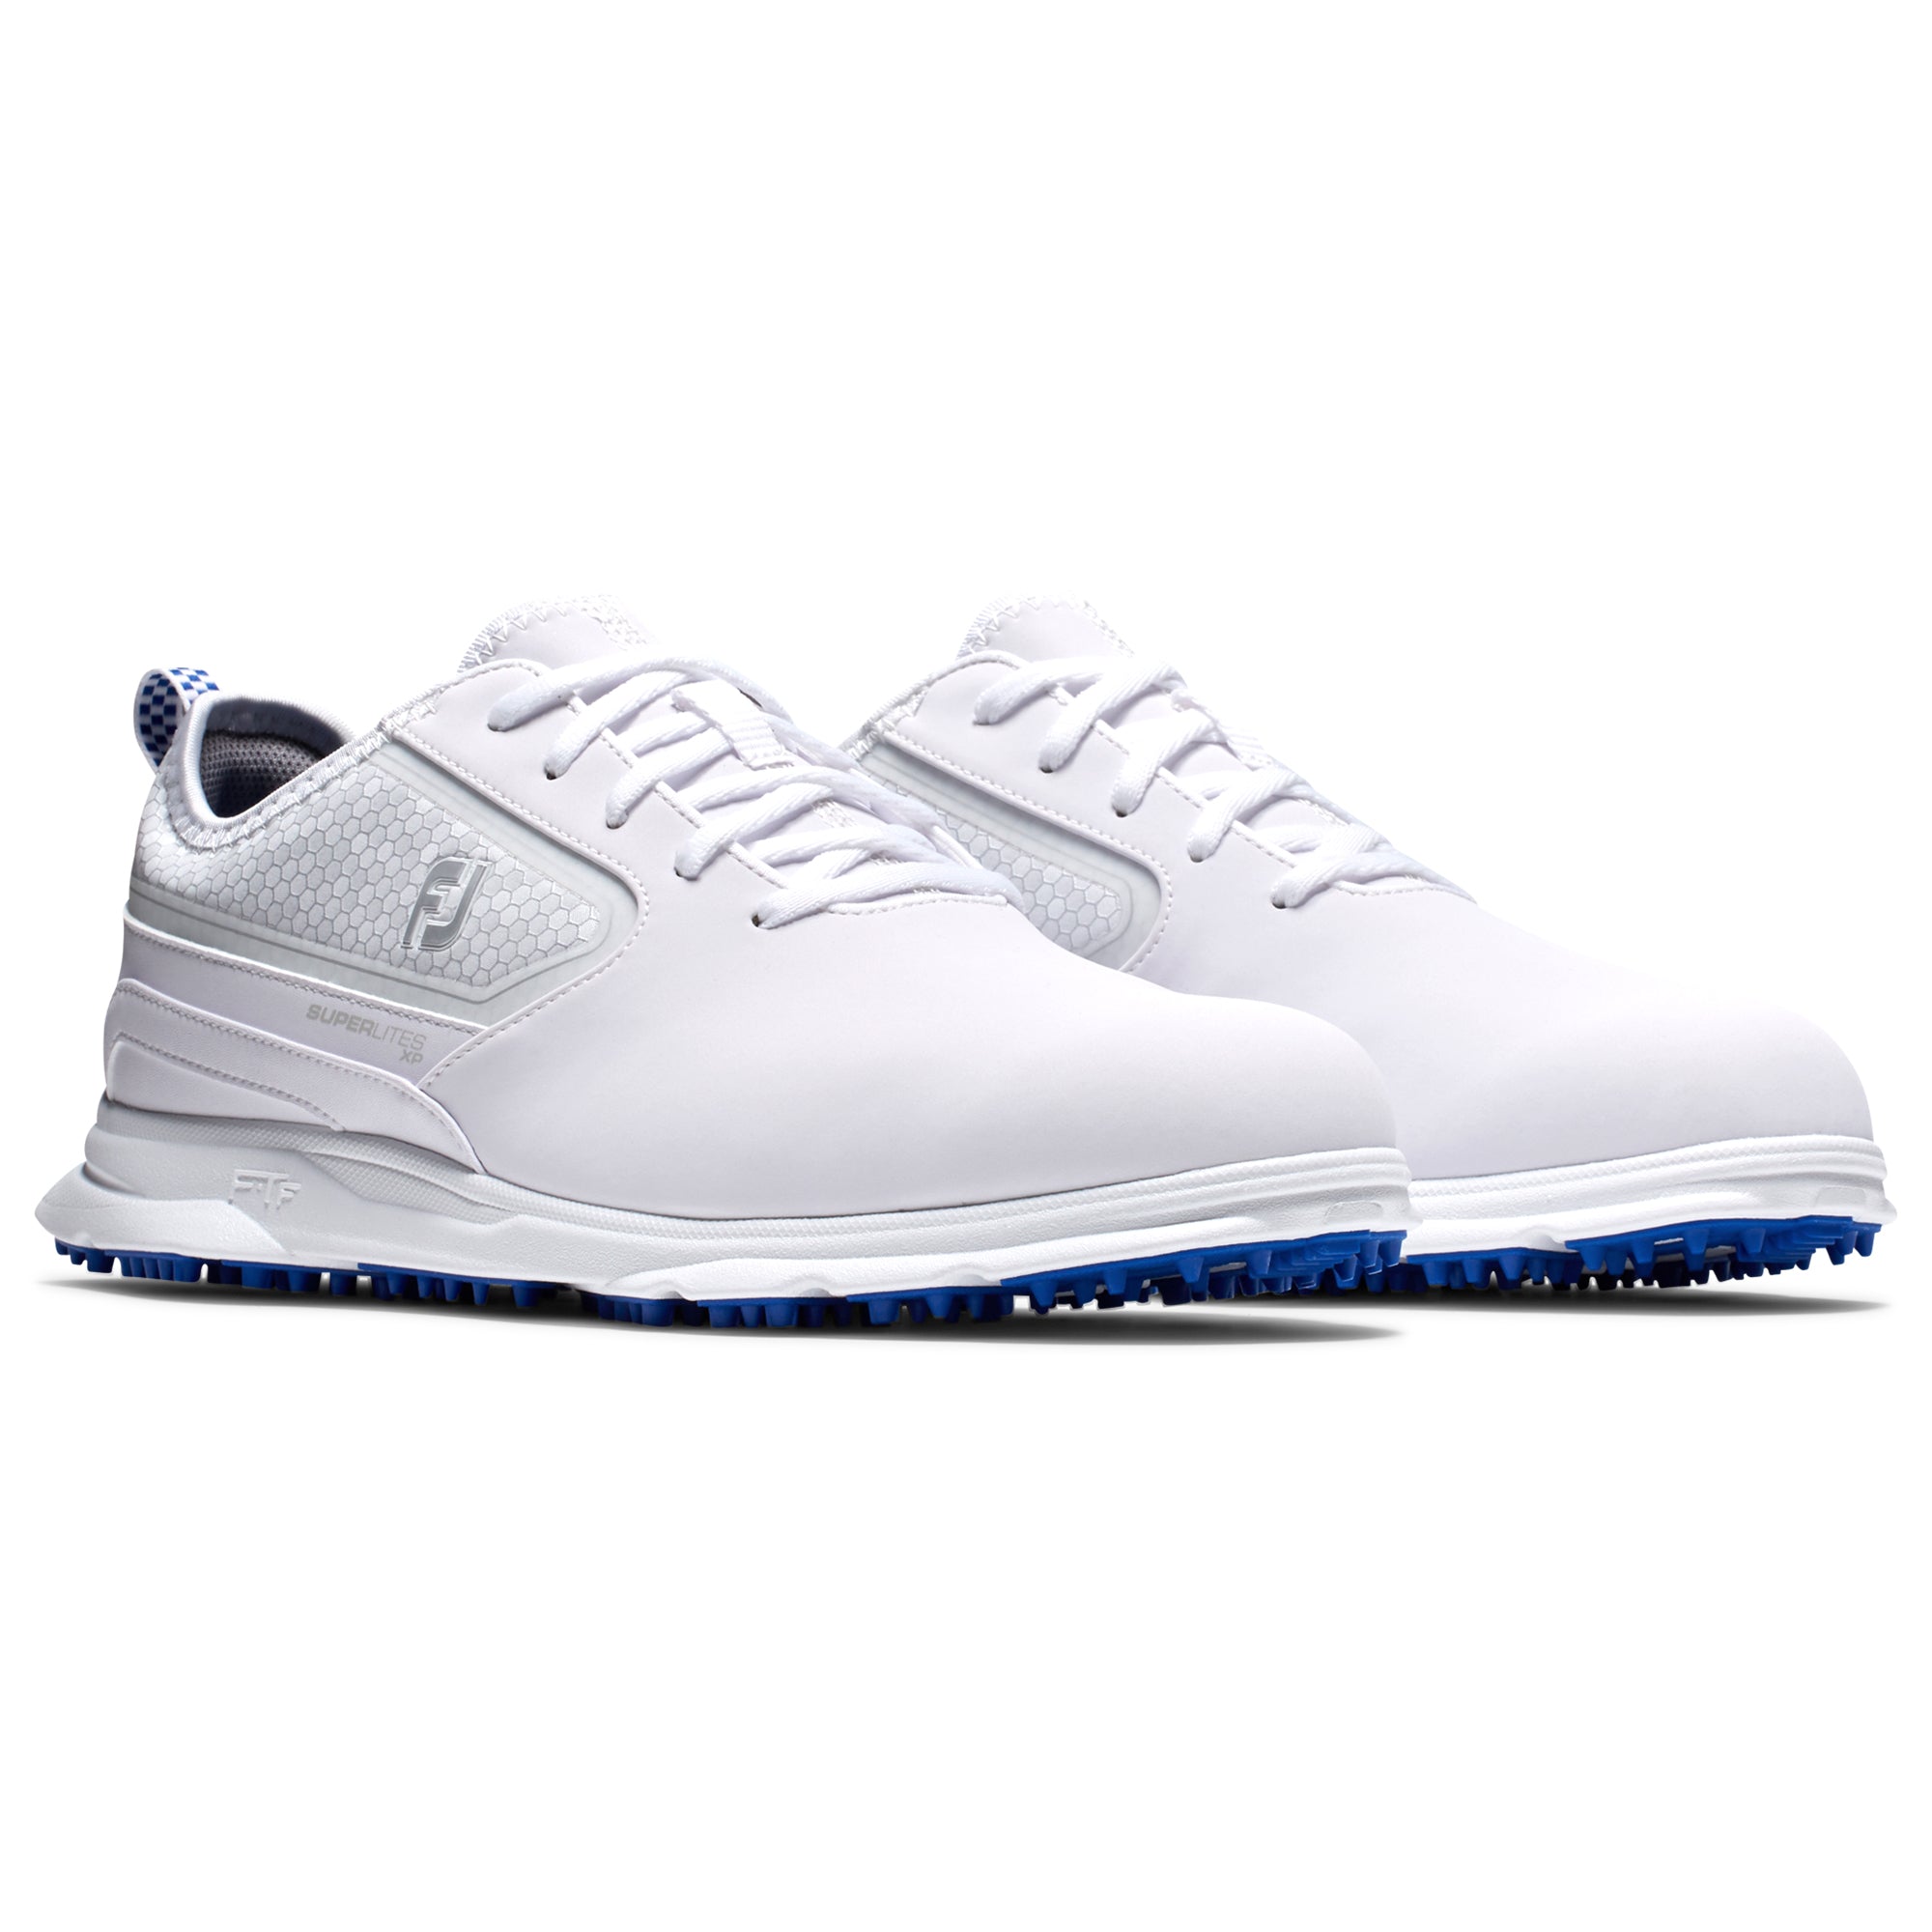 footjoy-superlites-xp-golf-shoes-58087-white-grey